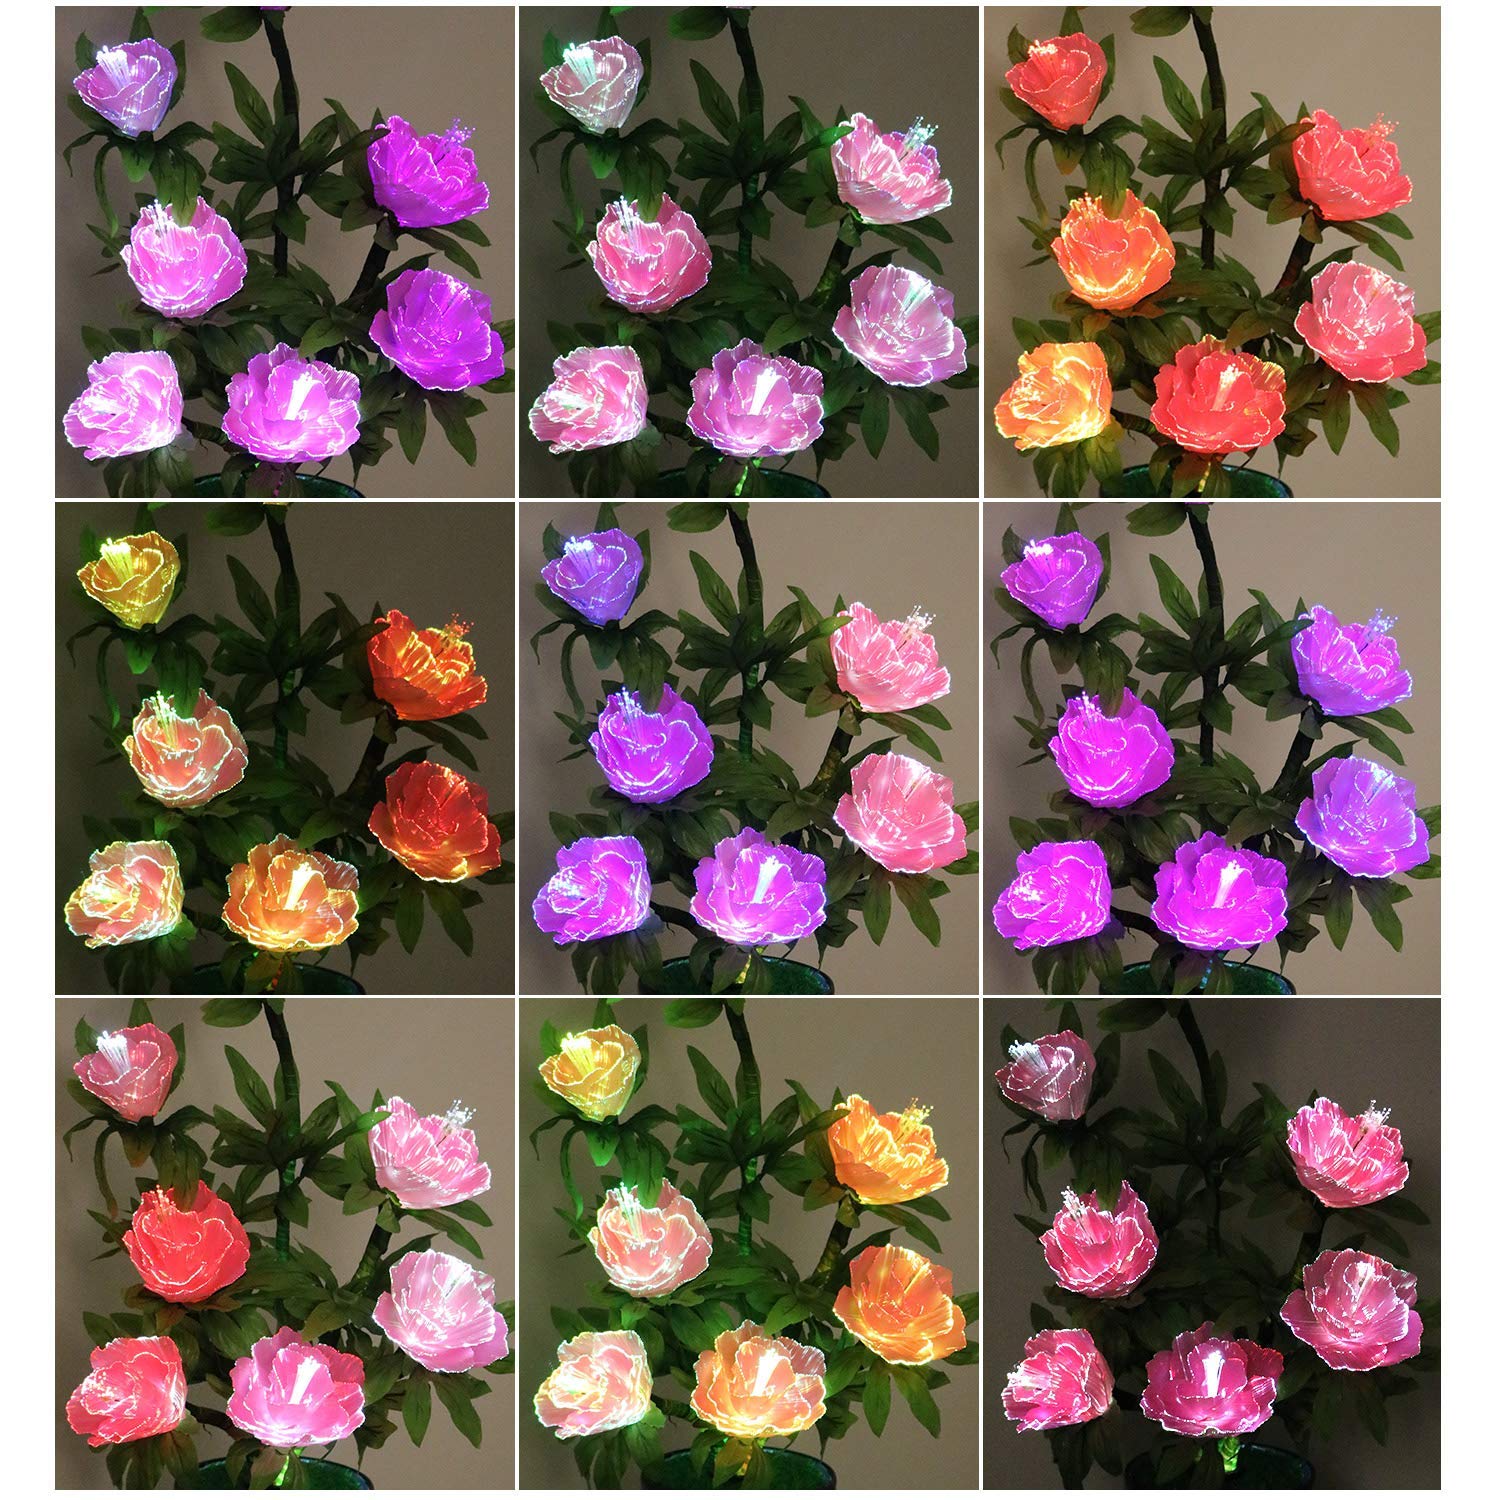 Tronje, LED-Kunstblumen, Pfingstrose Rosa, 14x14x63cm, mit Steckernetzteil